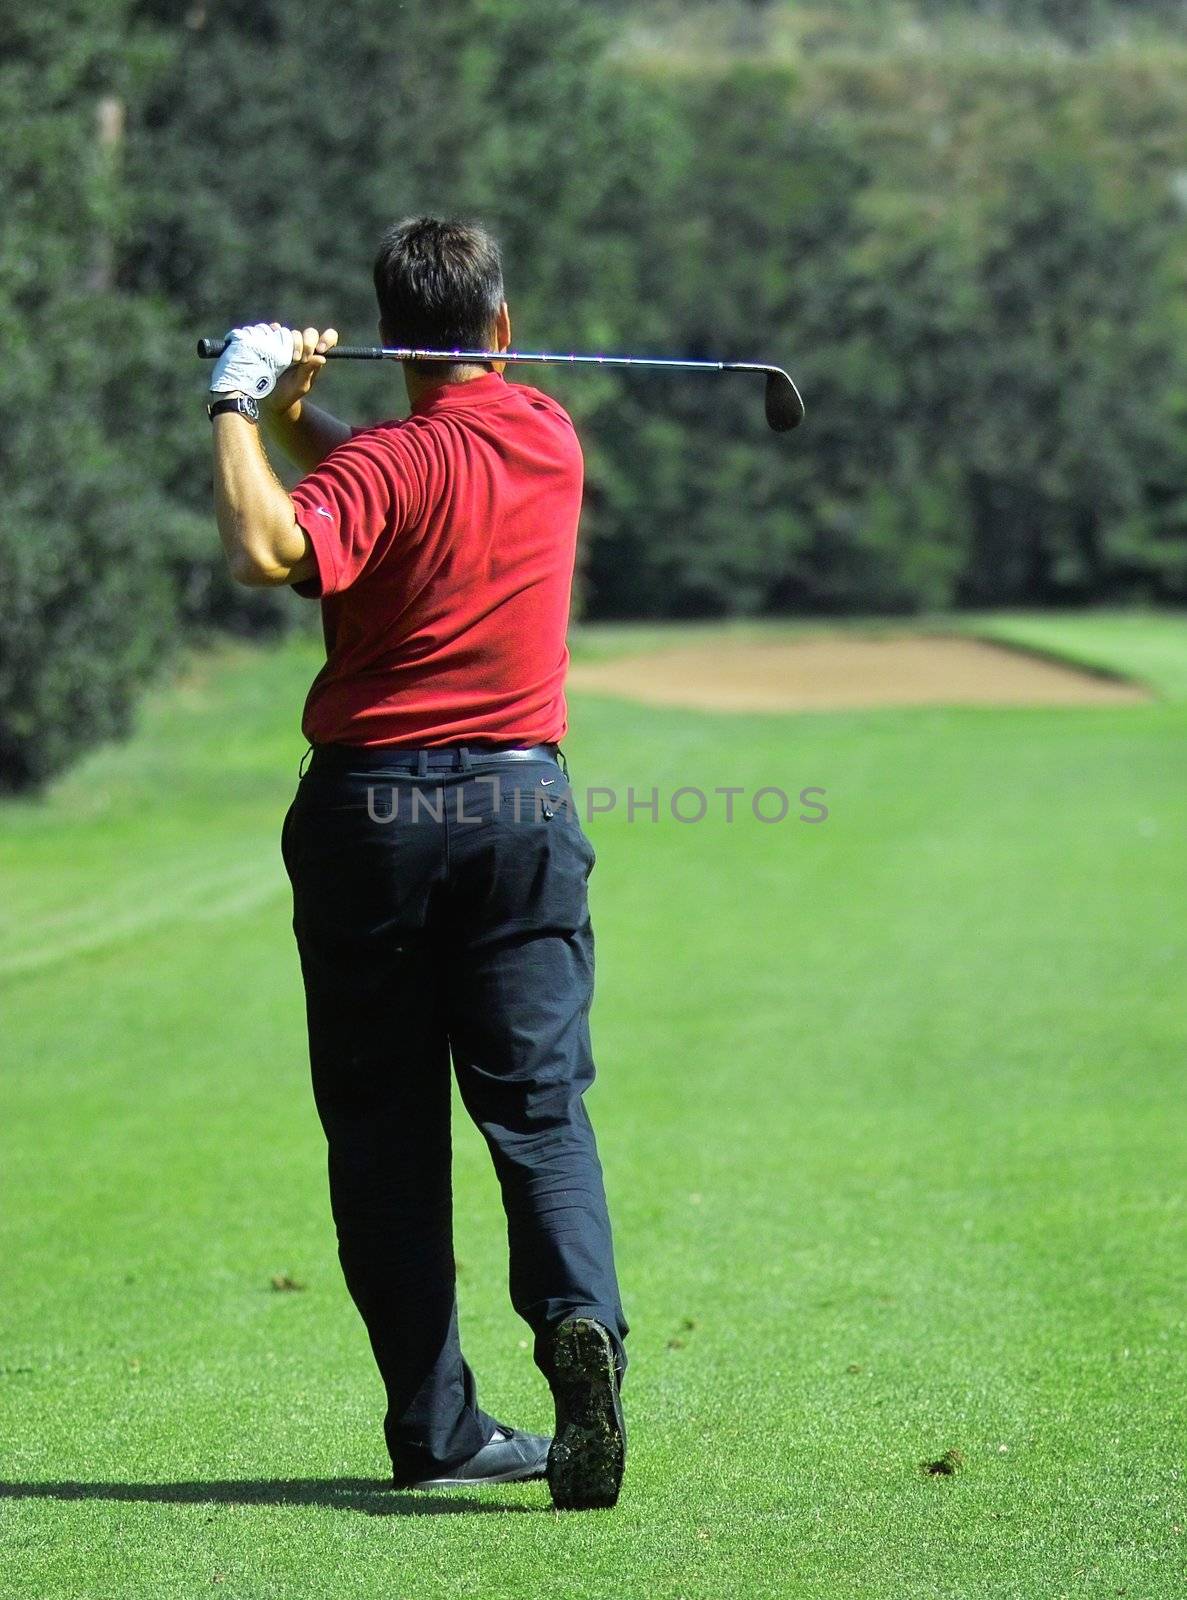 golfer on a golf course